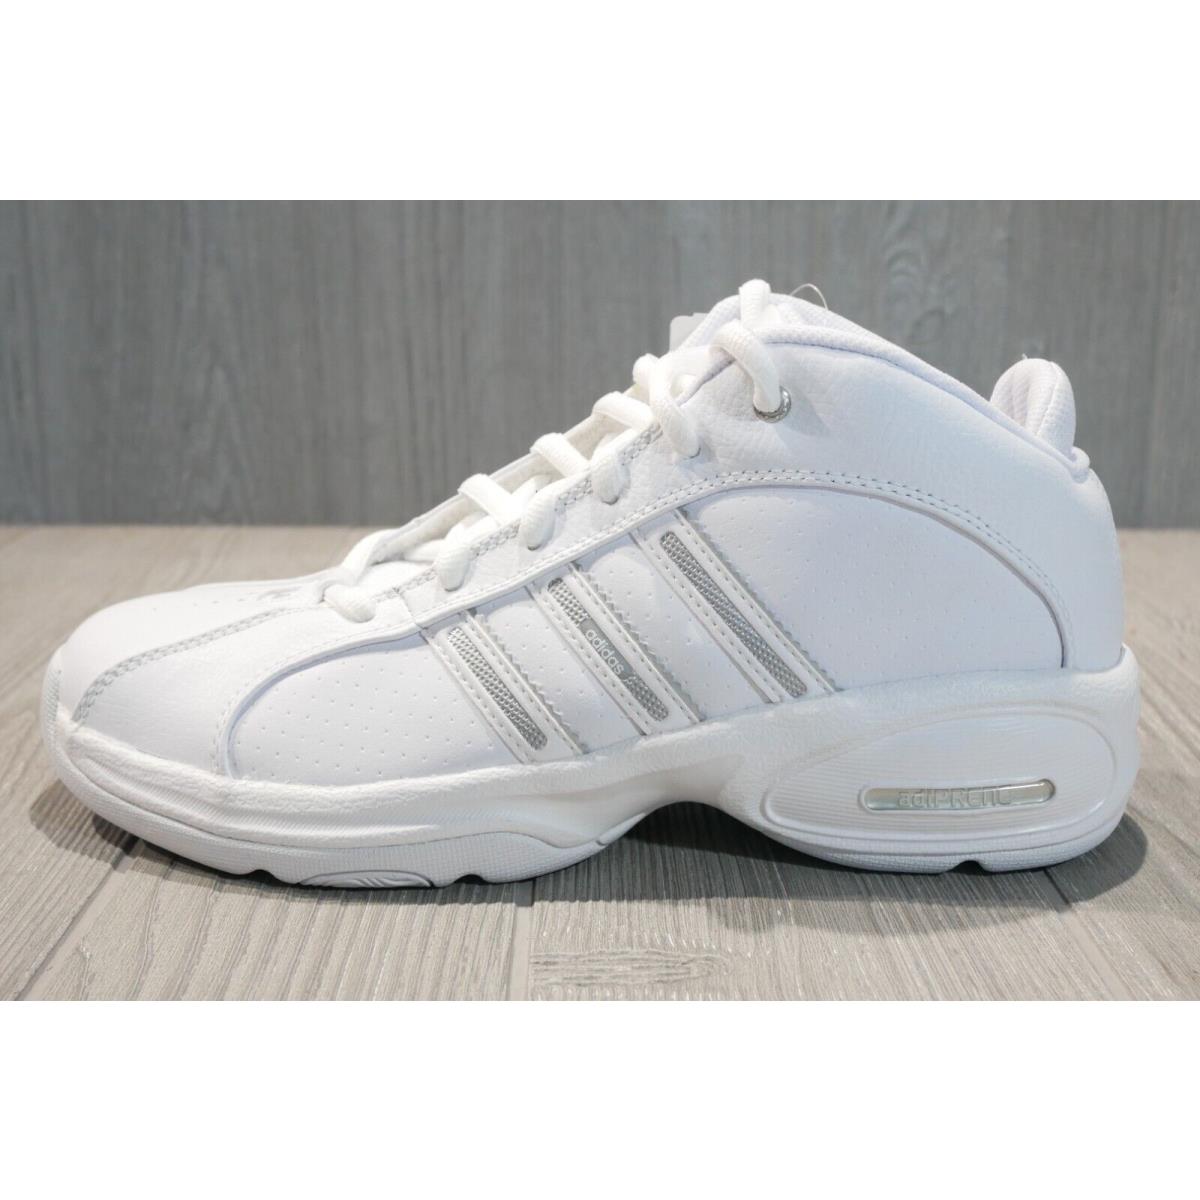 Vintage Adidas Supercush White Leather 2005 Womens Shoes Size 9 Oss